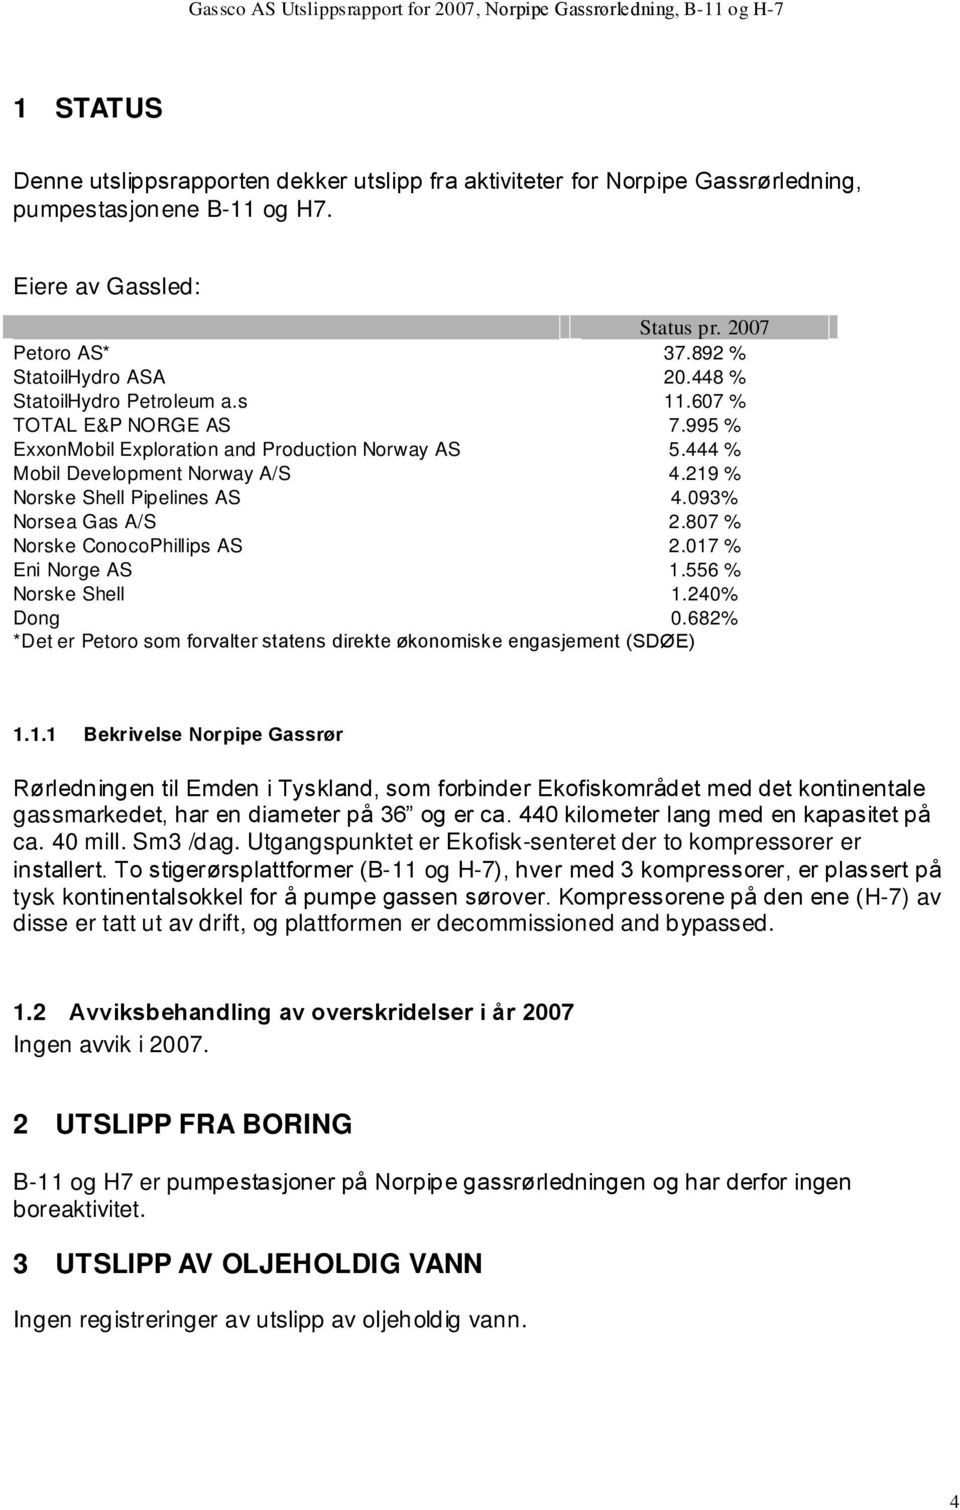 093% Norsea Gas A/S 2.807 % Norske ConocoPhillips AS 2.017